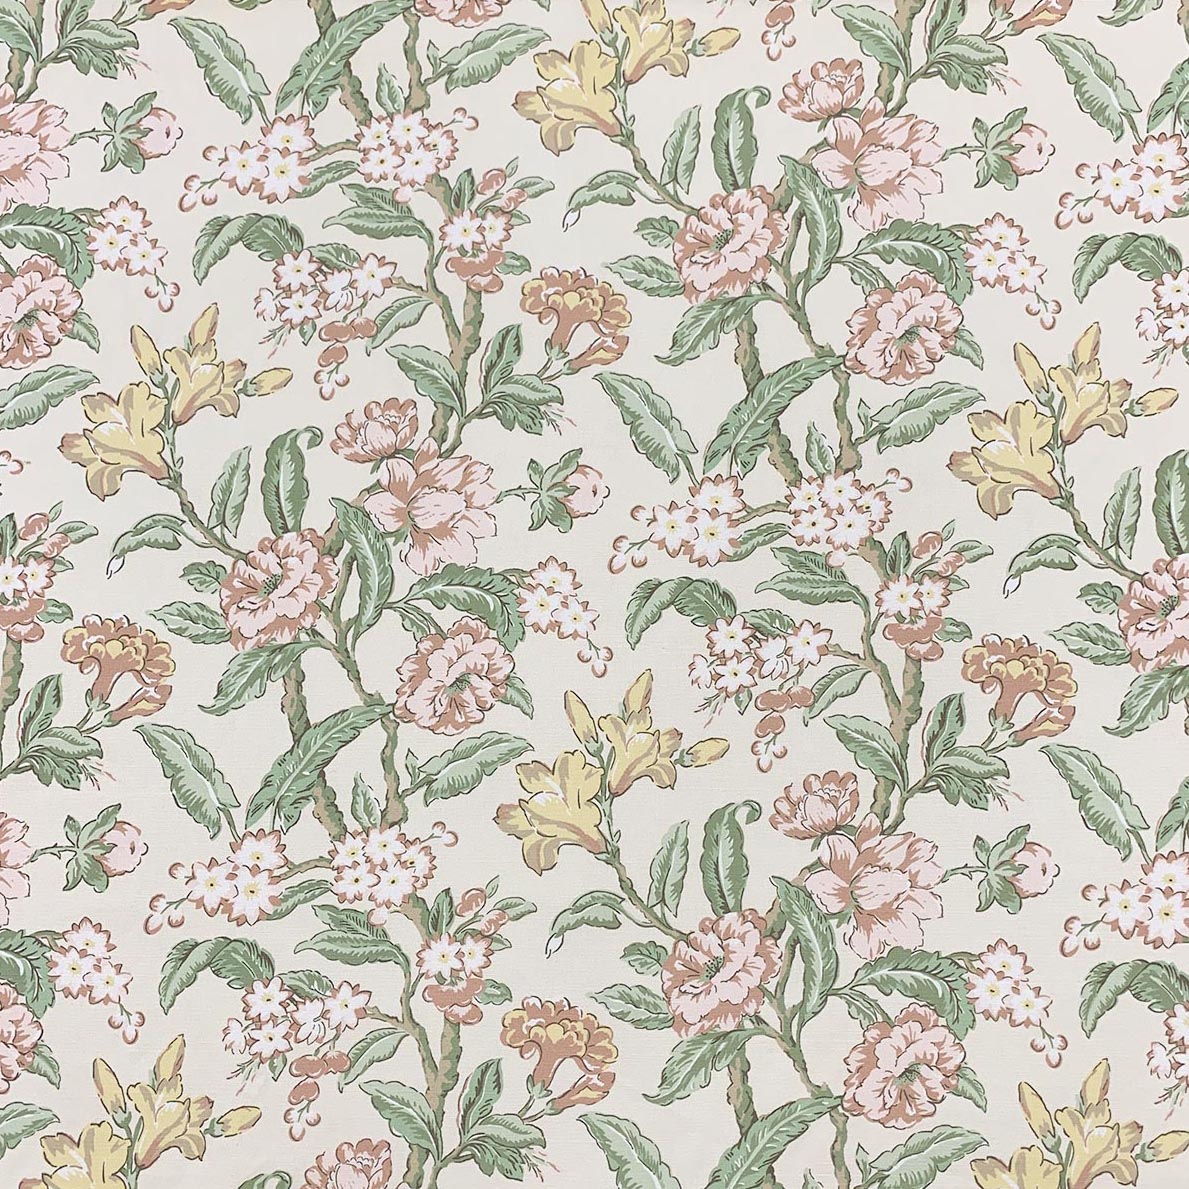 Purchase Mag FabricSKU# 11432 pattern name Lillian August Kate Garden